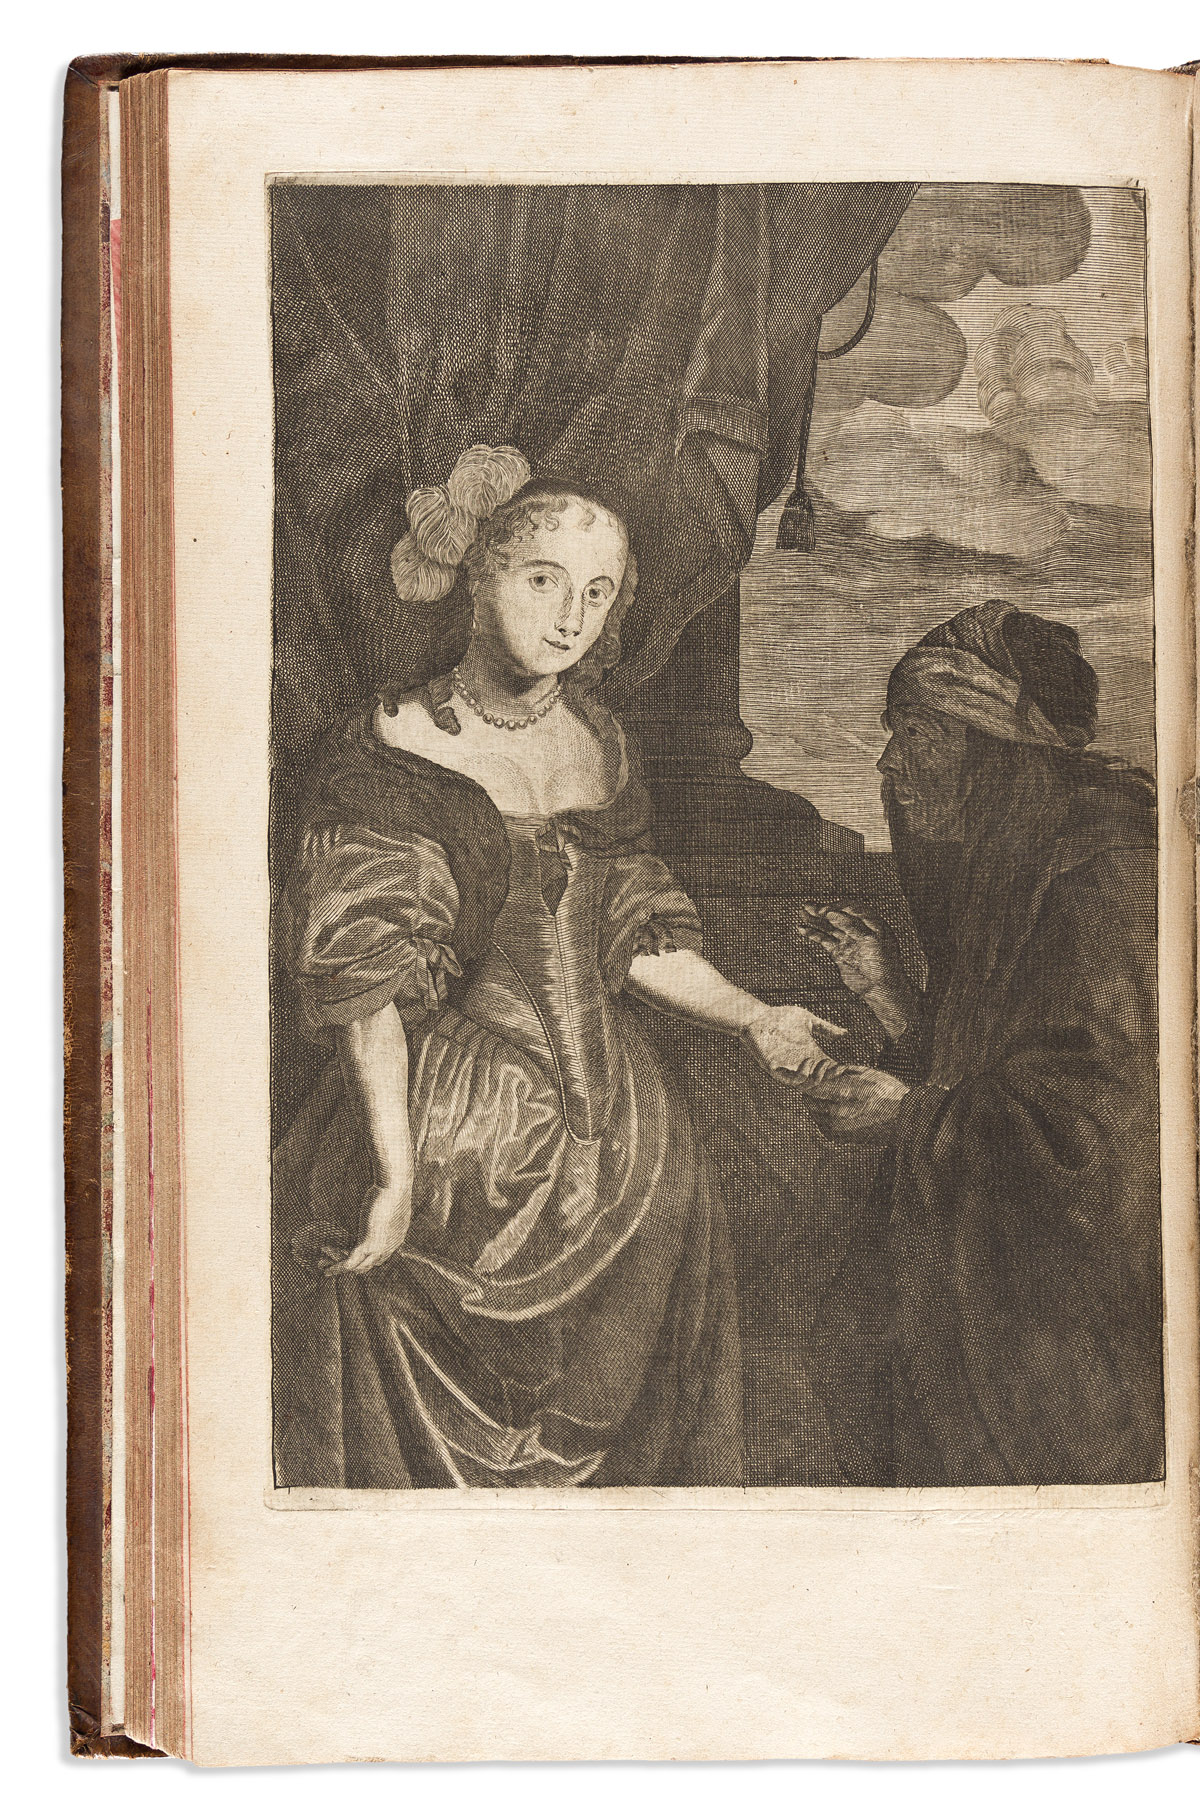 Vermeren, Michiel Frans (d. 1755) De Listige Onstantvastigheyt des Weirelts.